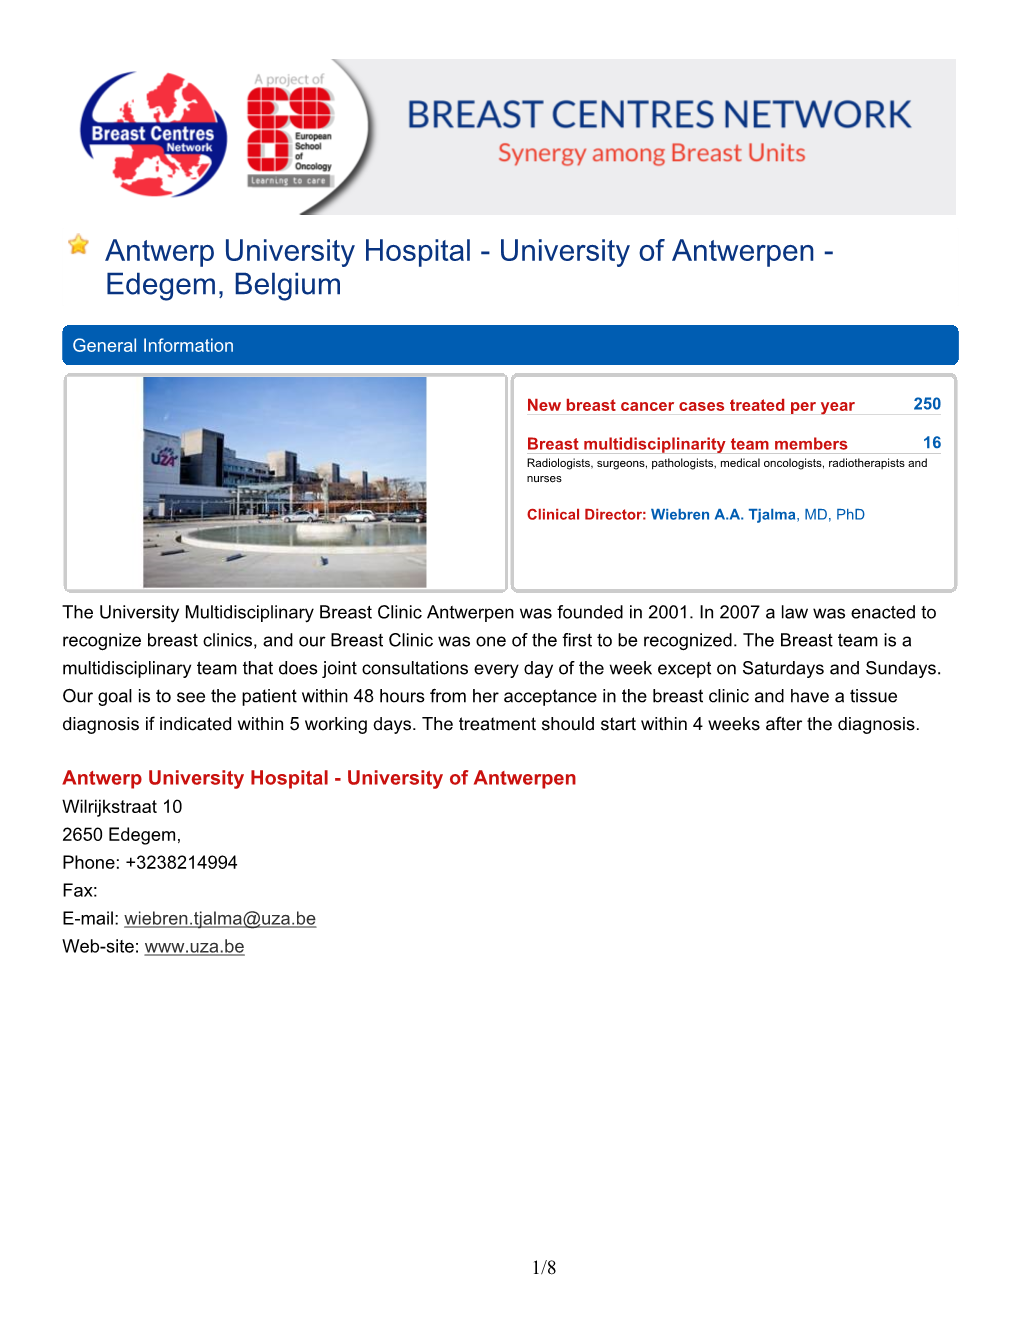 Antwerp University Hospital - University of Antwerpen - Edegem, Belgium